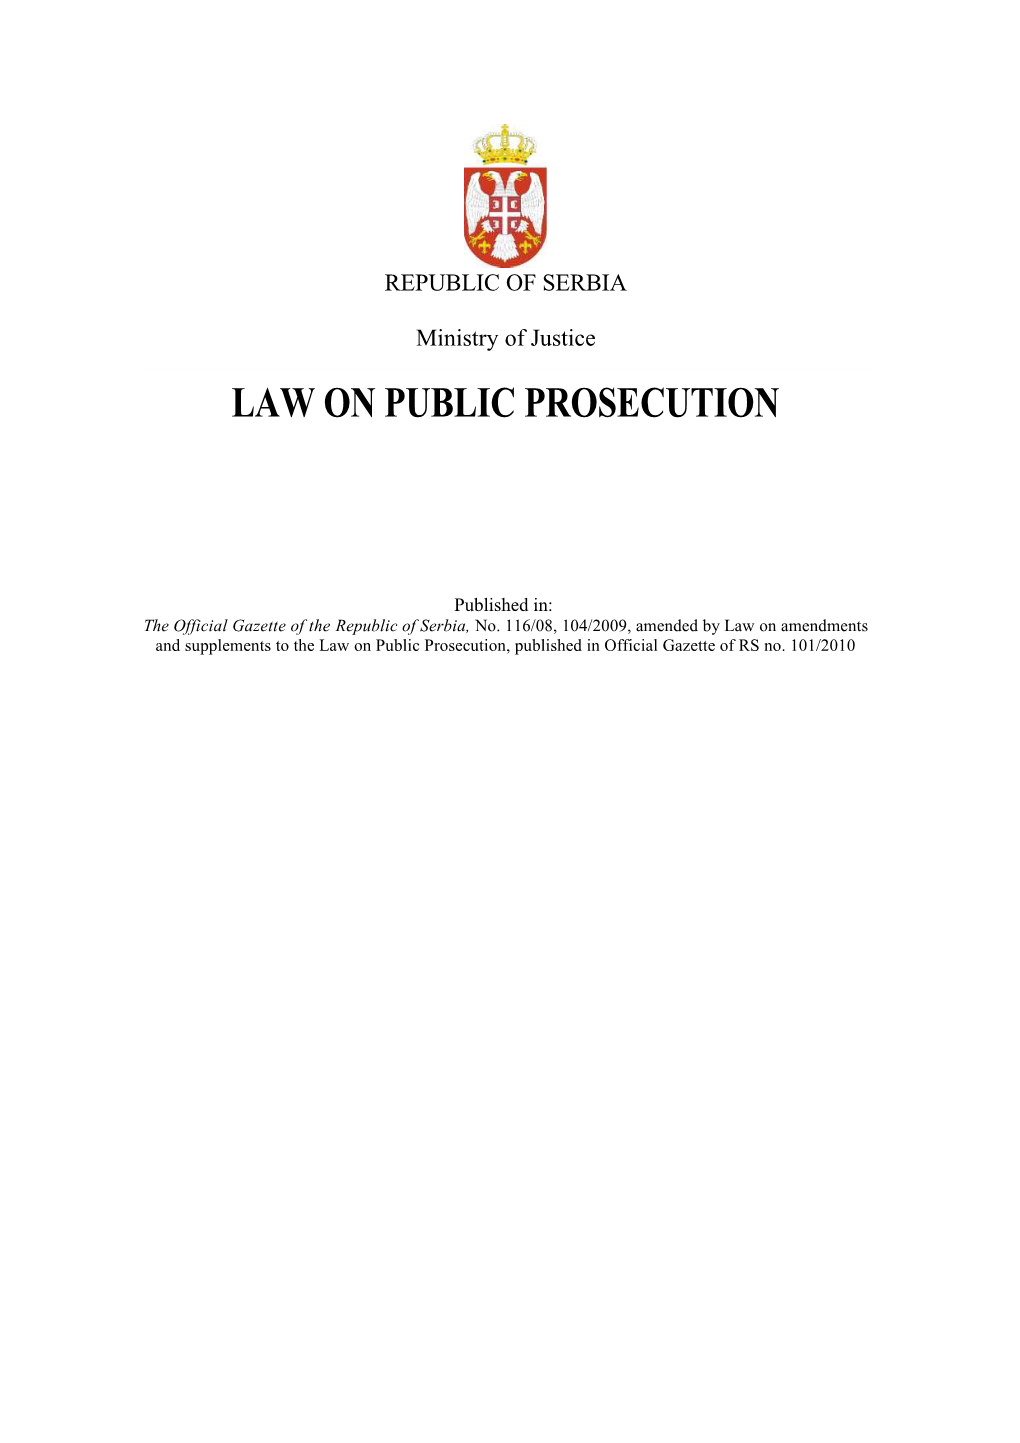 Law on Public Prosecution